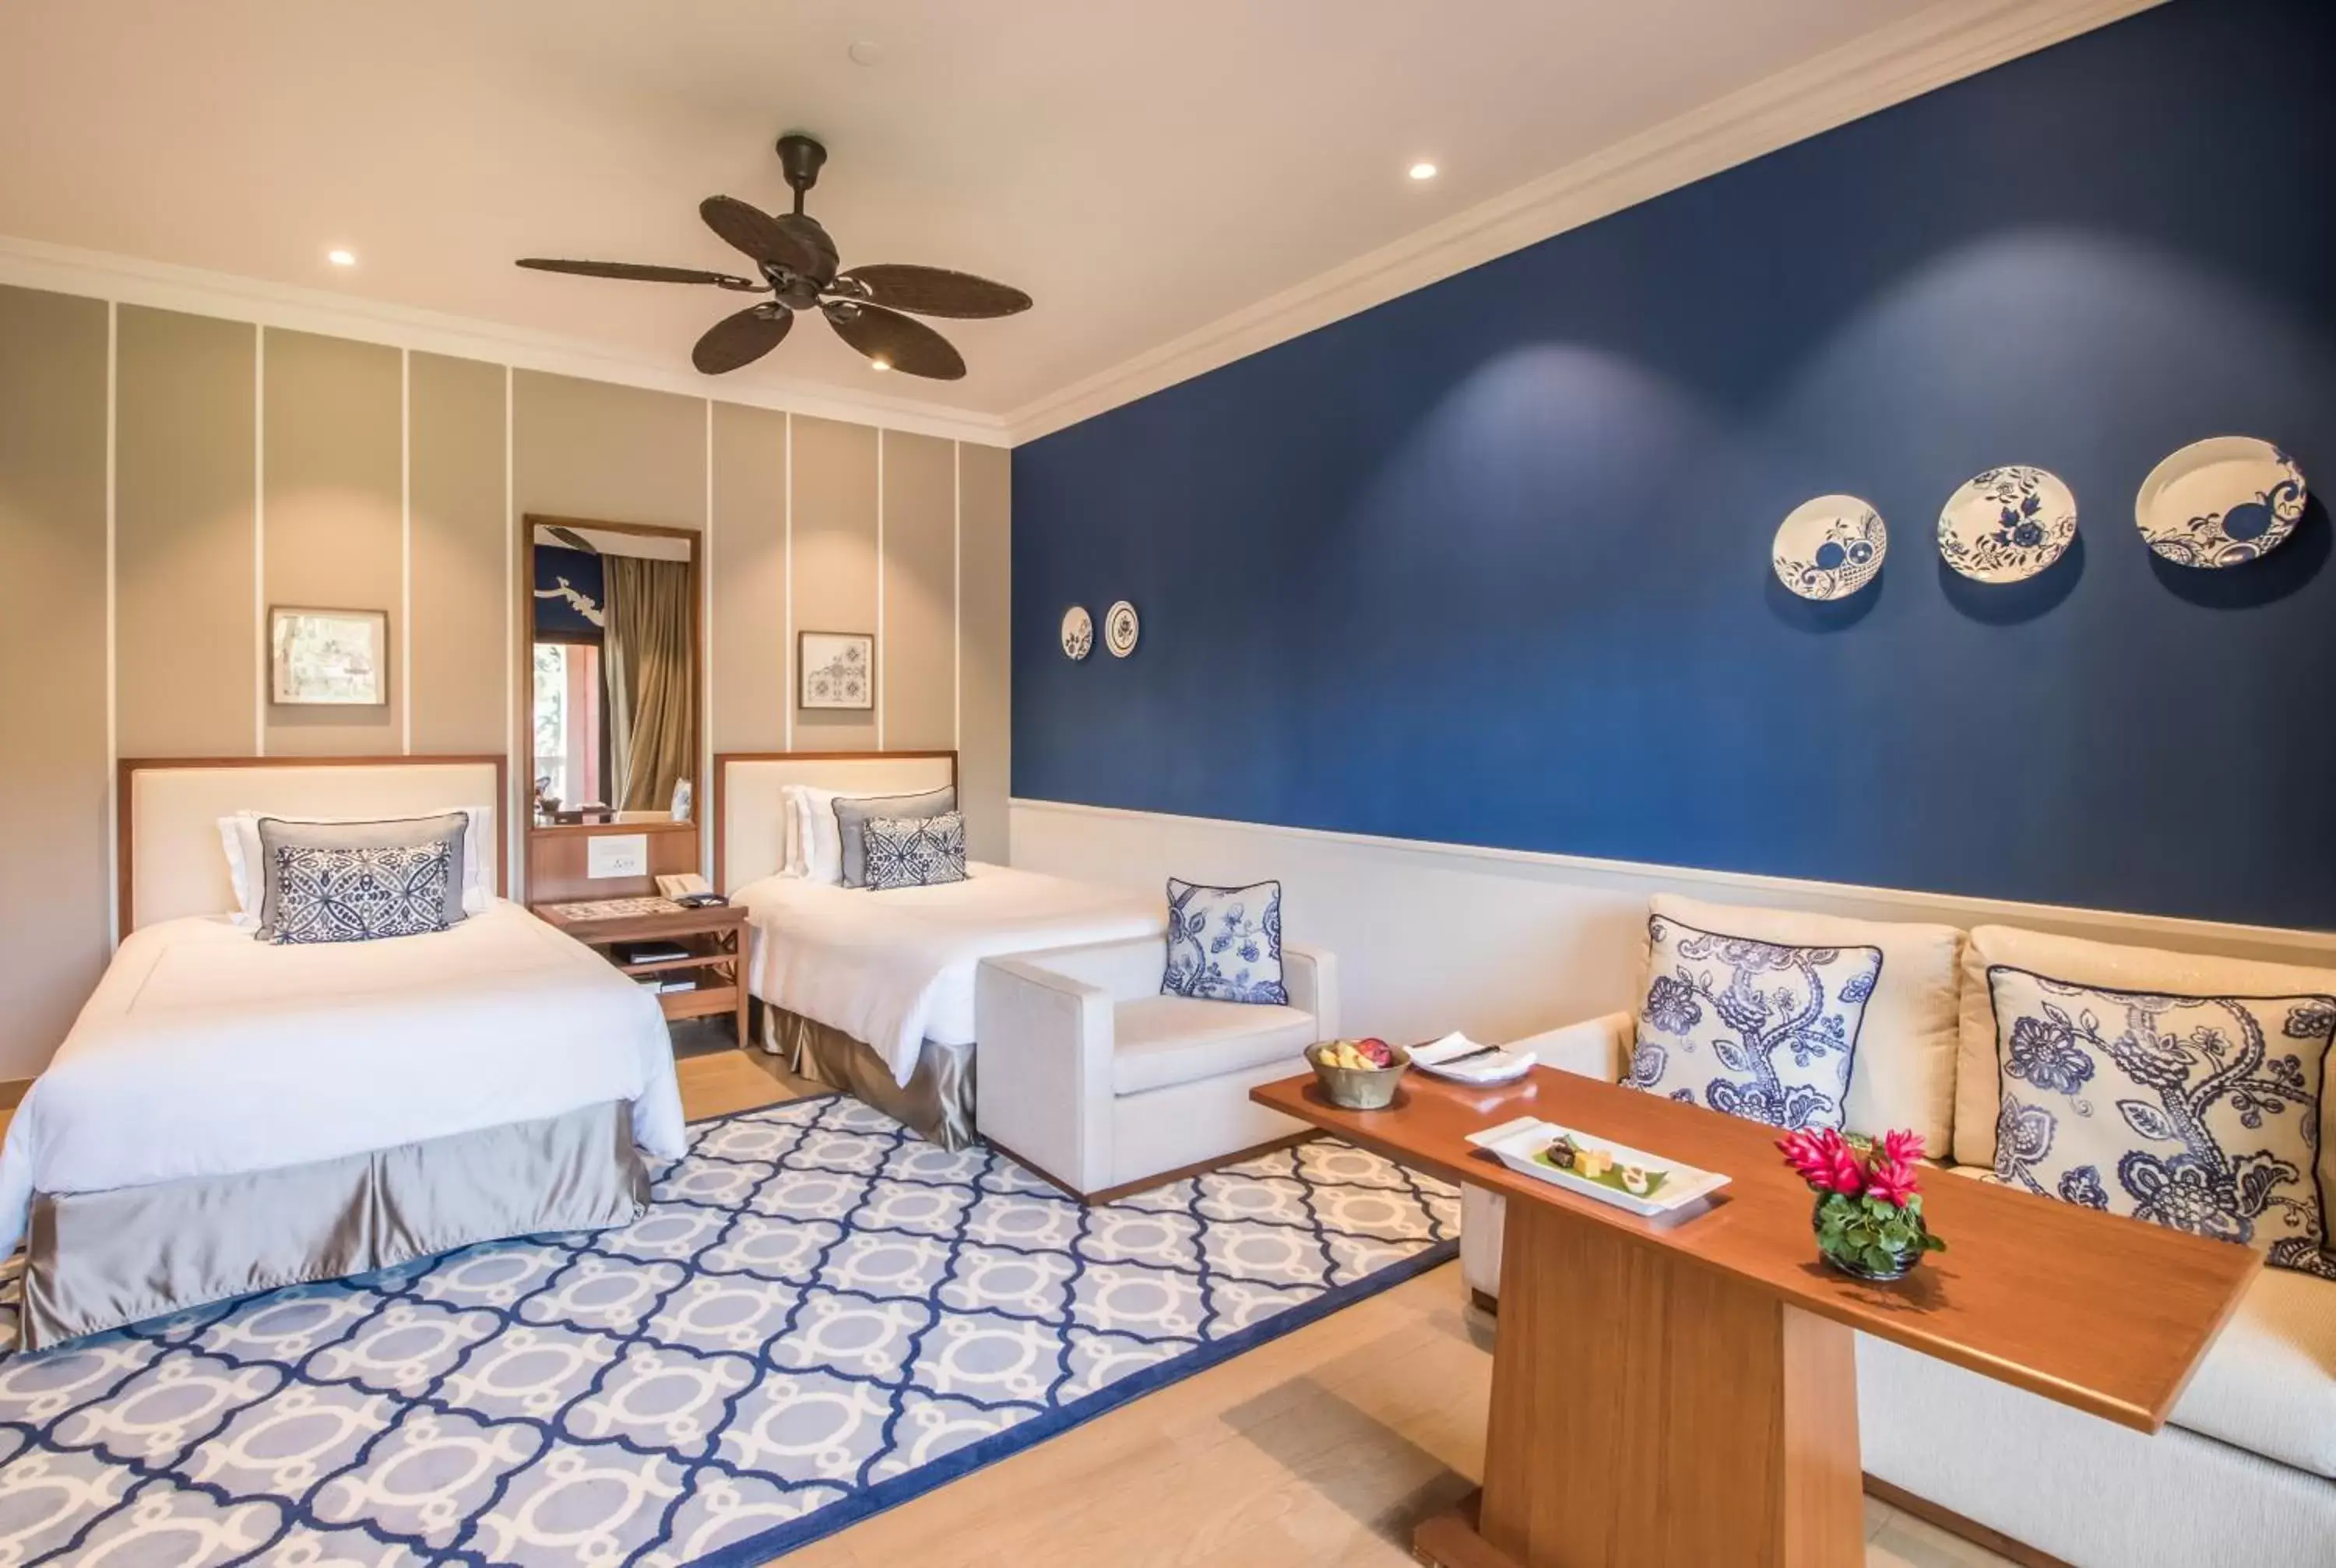 Photo of the whole room in Taj Exotica Resort & Spa, Goa